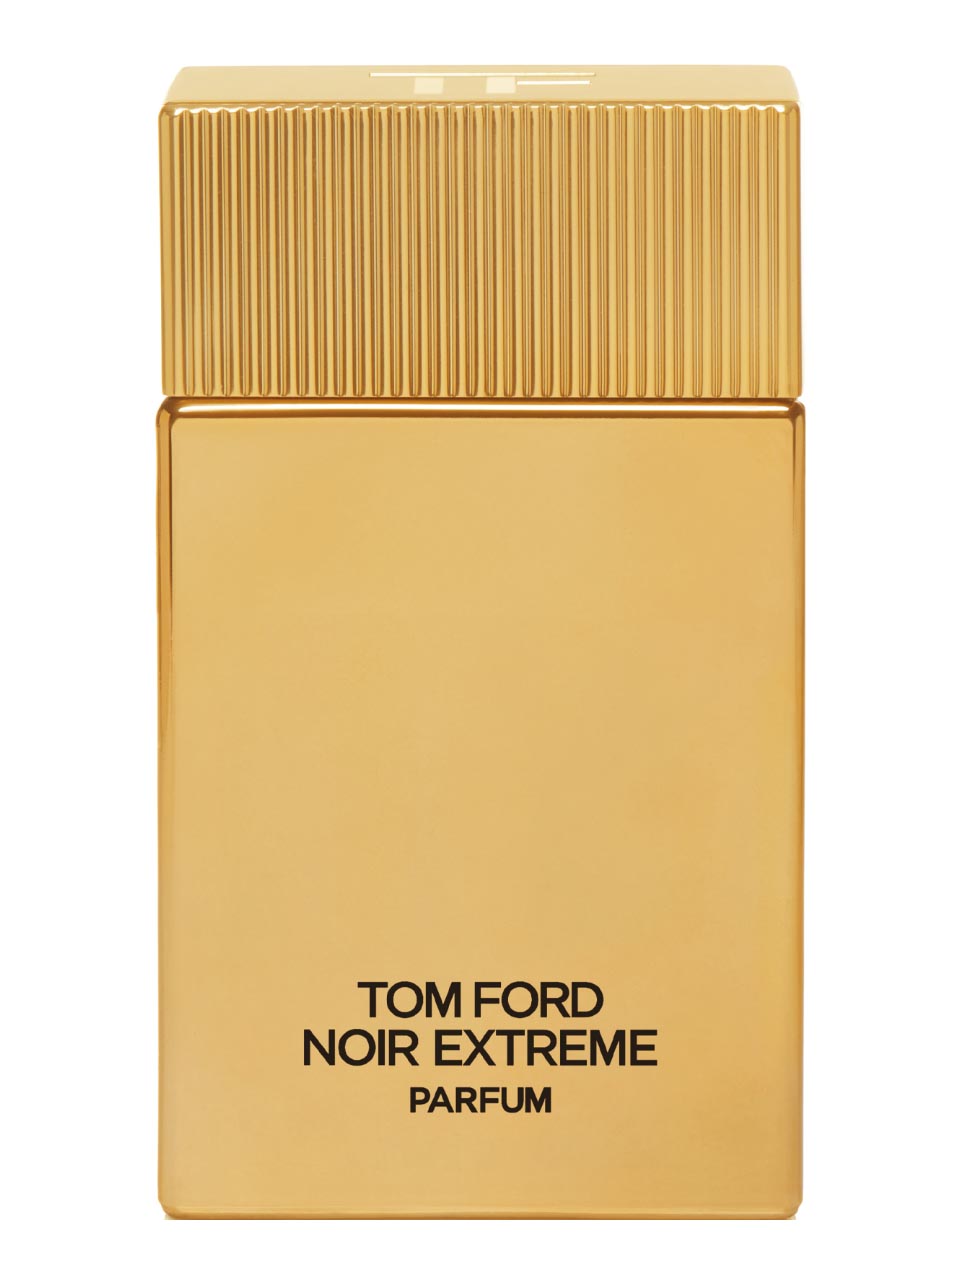 Tom Ford Noir Extreme Parfum 100 ml null - onesize - 1